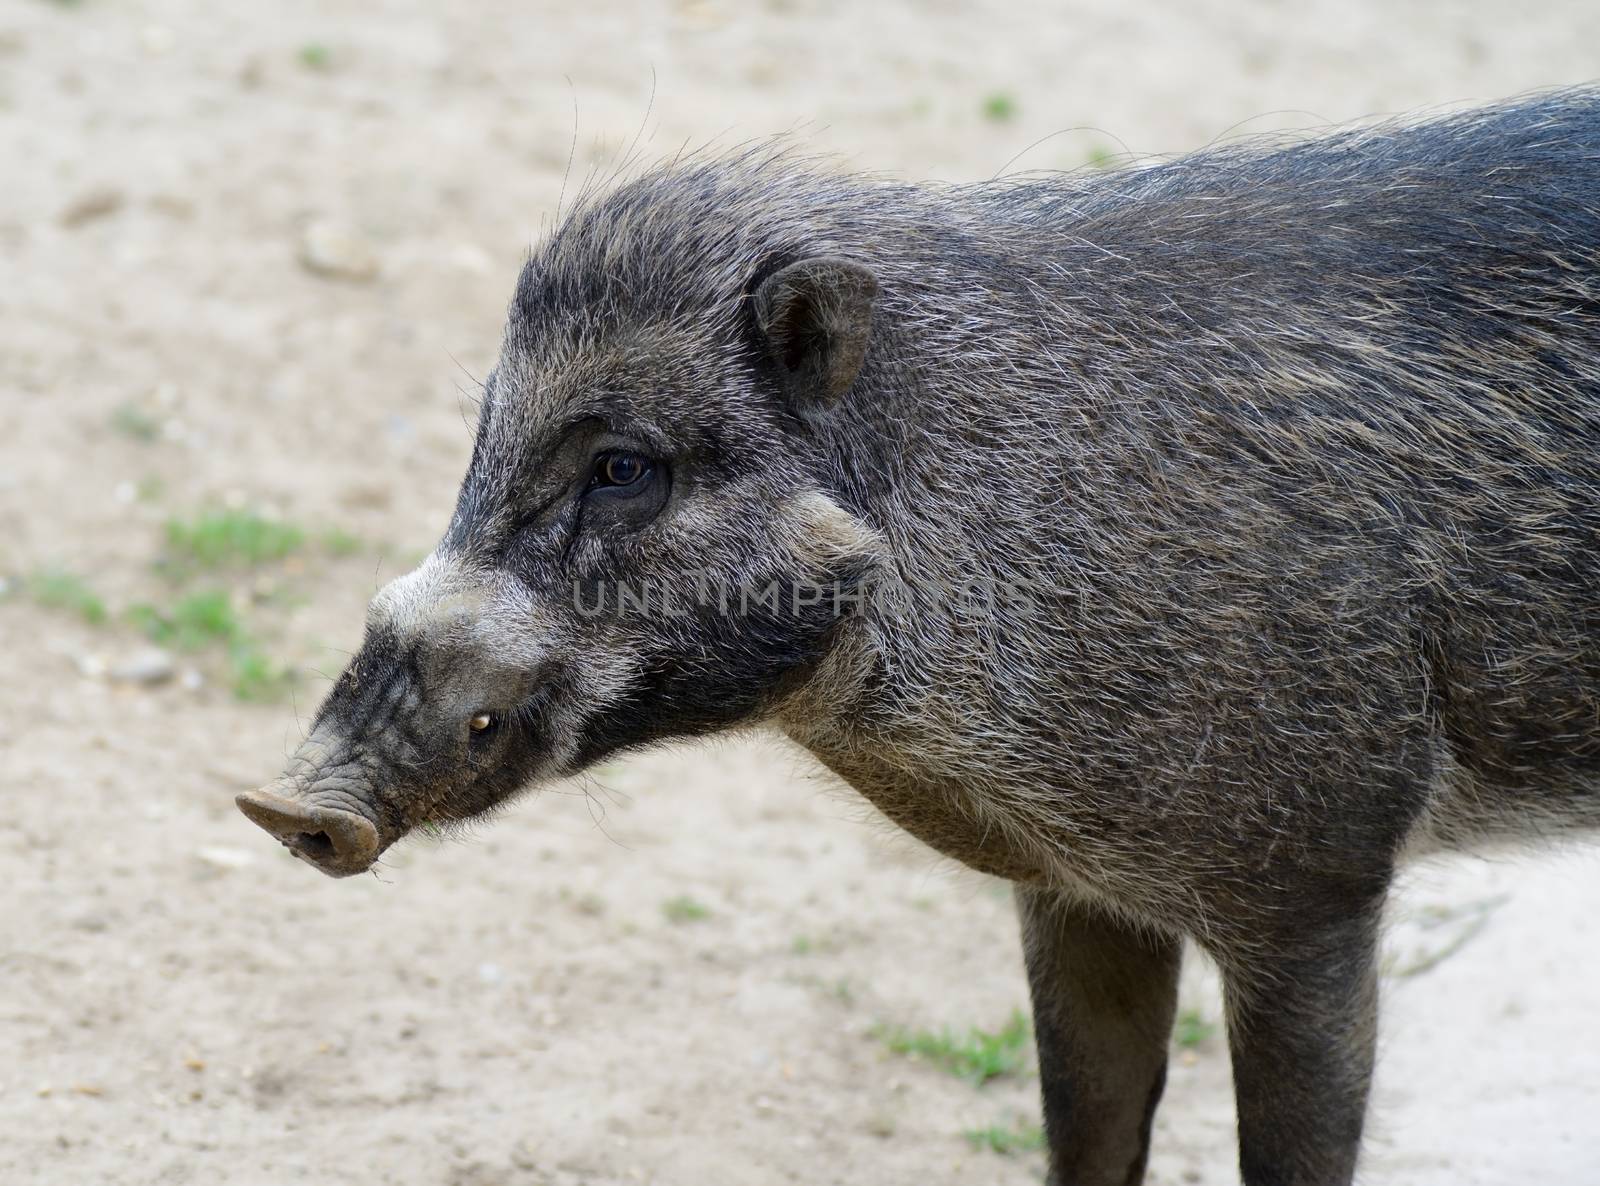 Visayan warty pig by kmwphotography